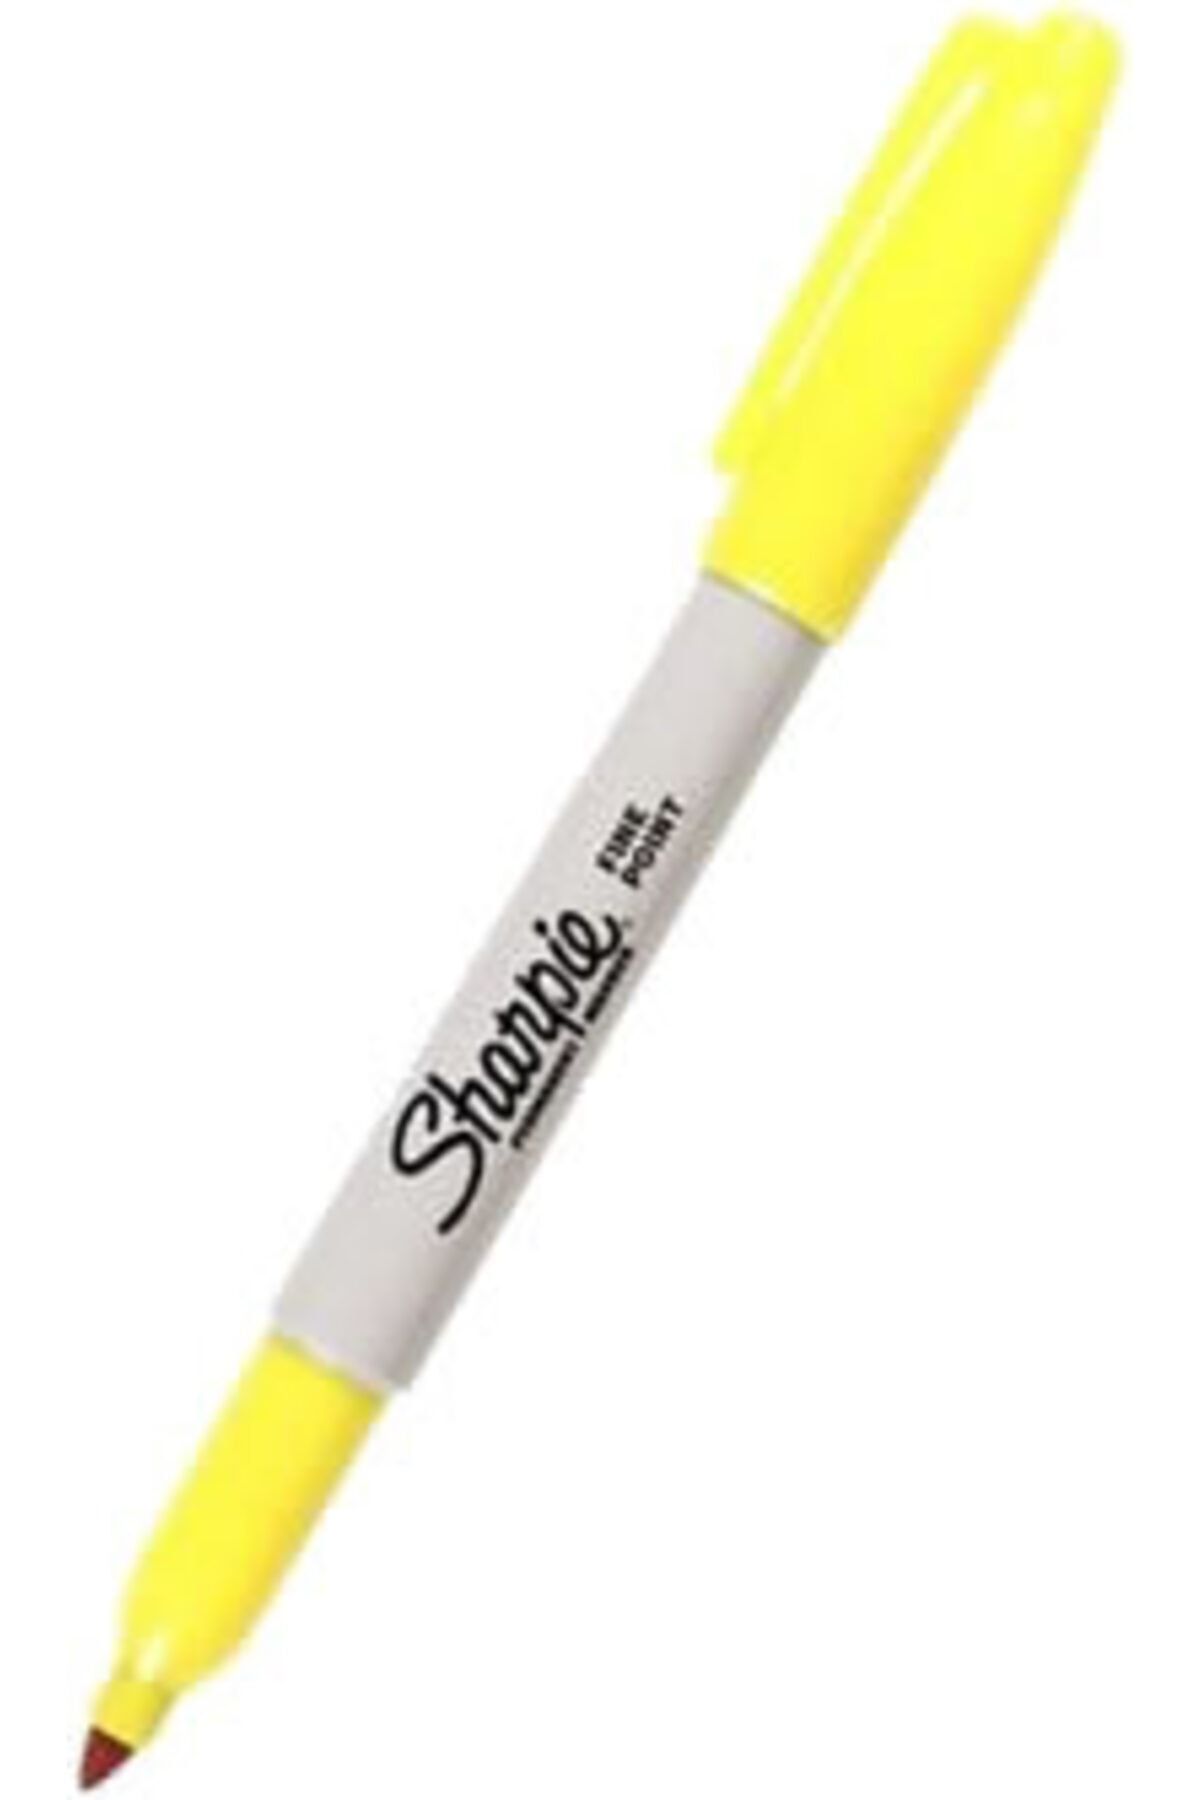 Sharpie Sharpıe Koyu Sarı Fıne Permanent Markör Kalem